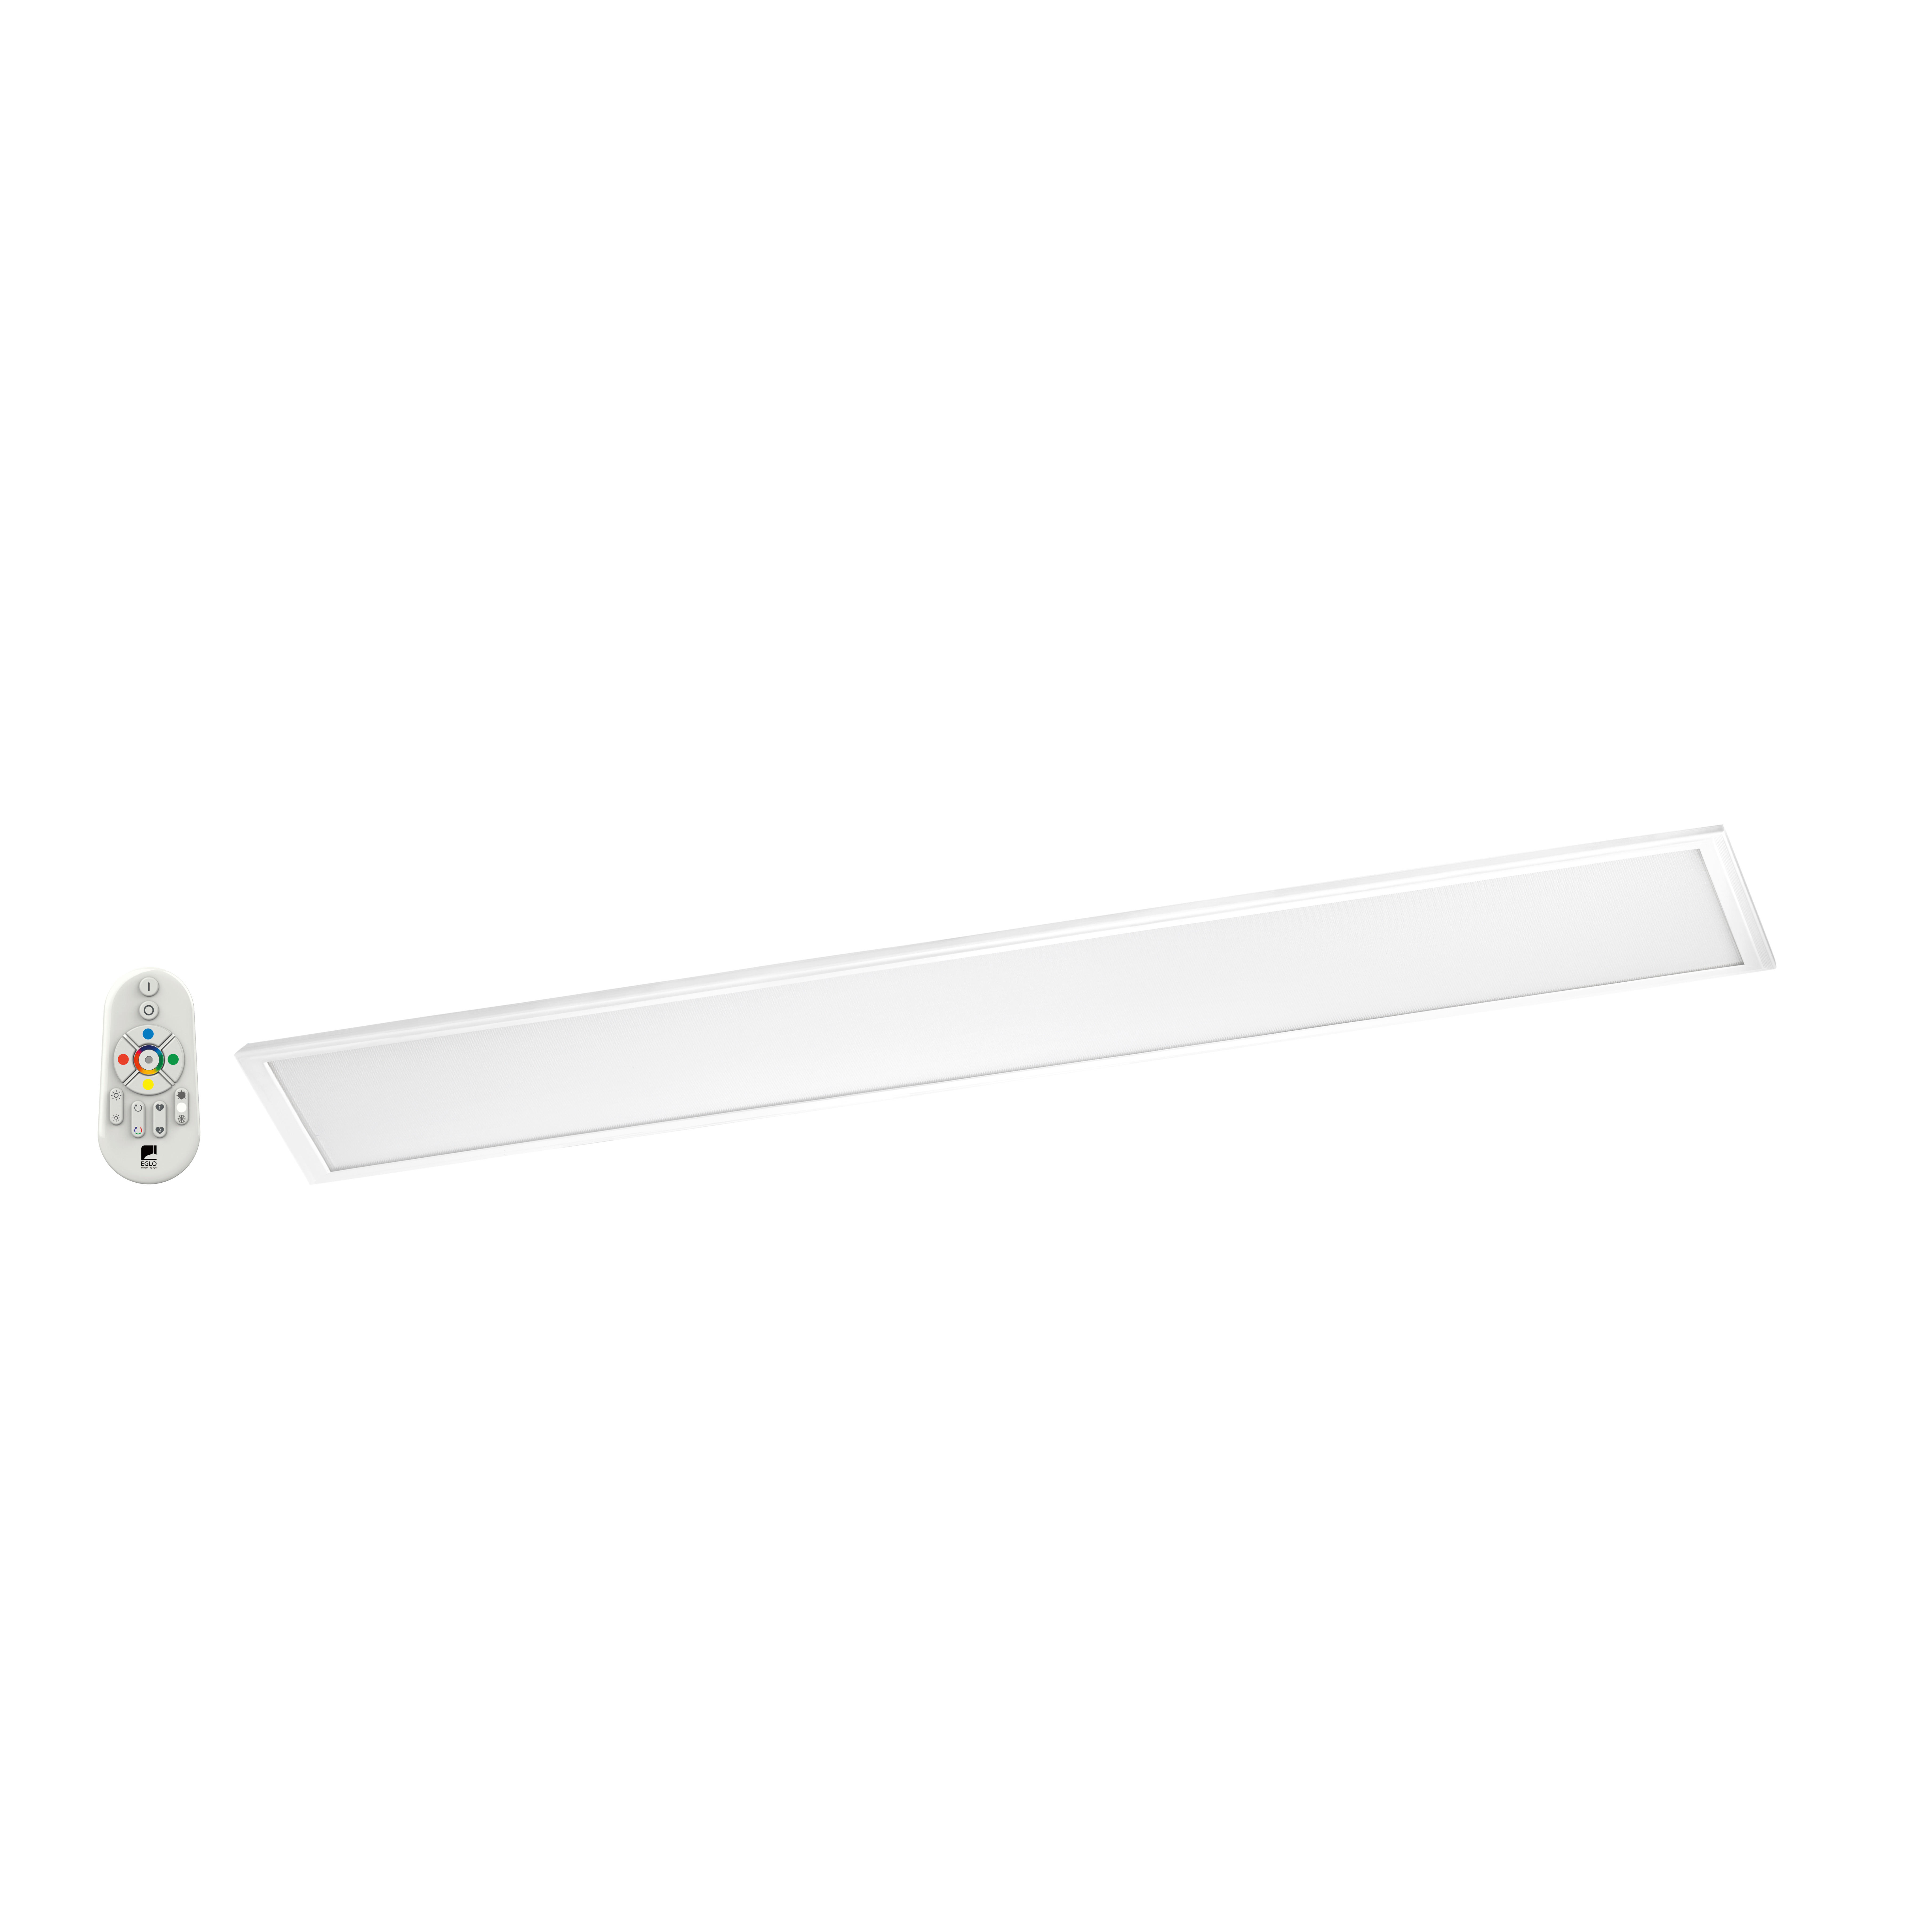 LED-PANEEL SALOBRENA-CONNECT  - Weiß, Design, Kunststoff/Metall (120/30/5cm)